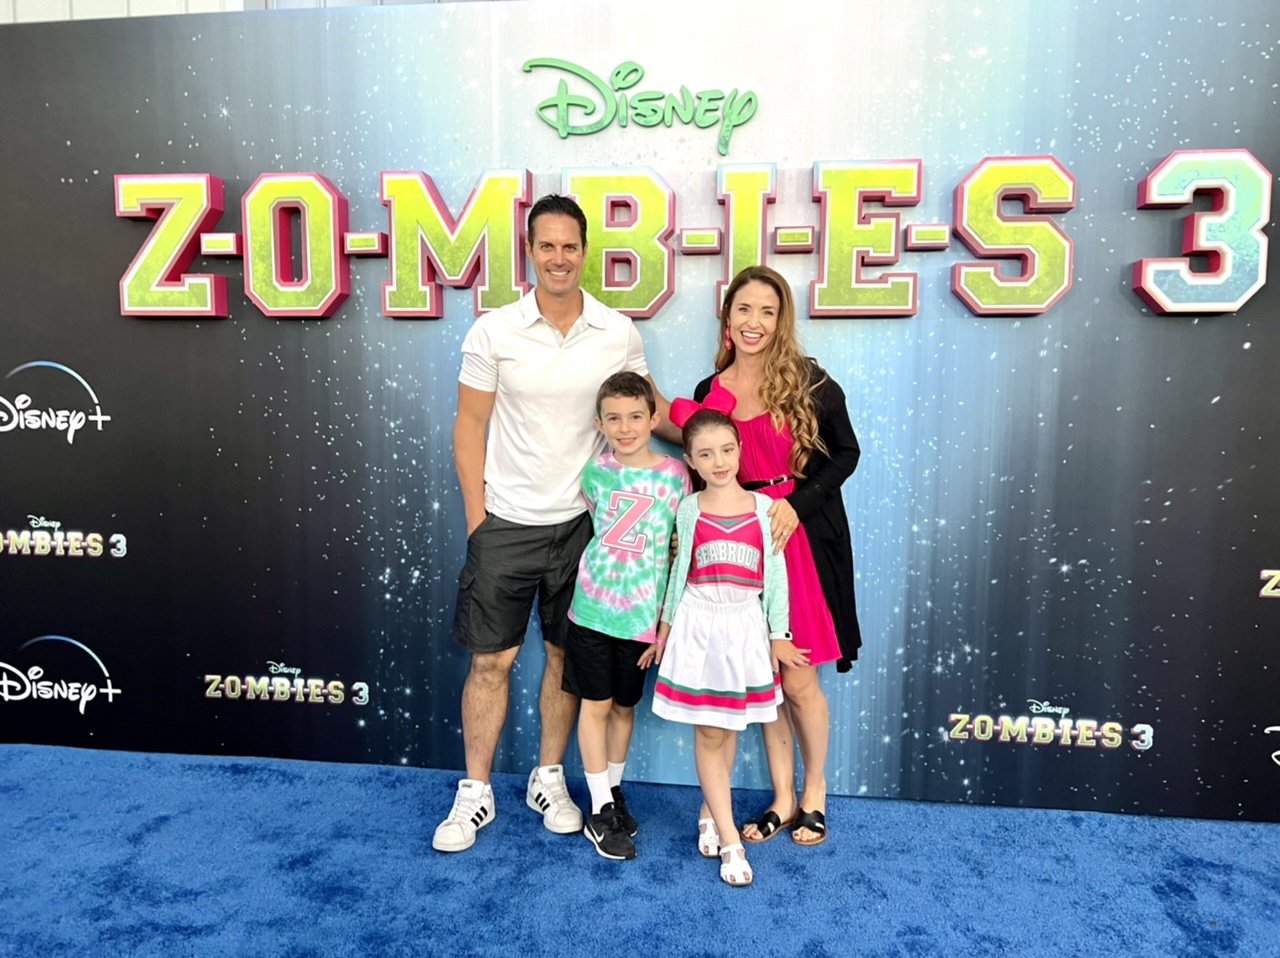 Zombies 3 Movie Review - Princess Turned Mom